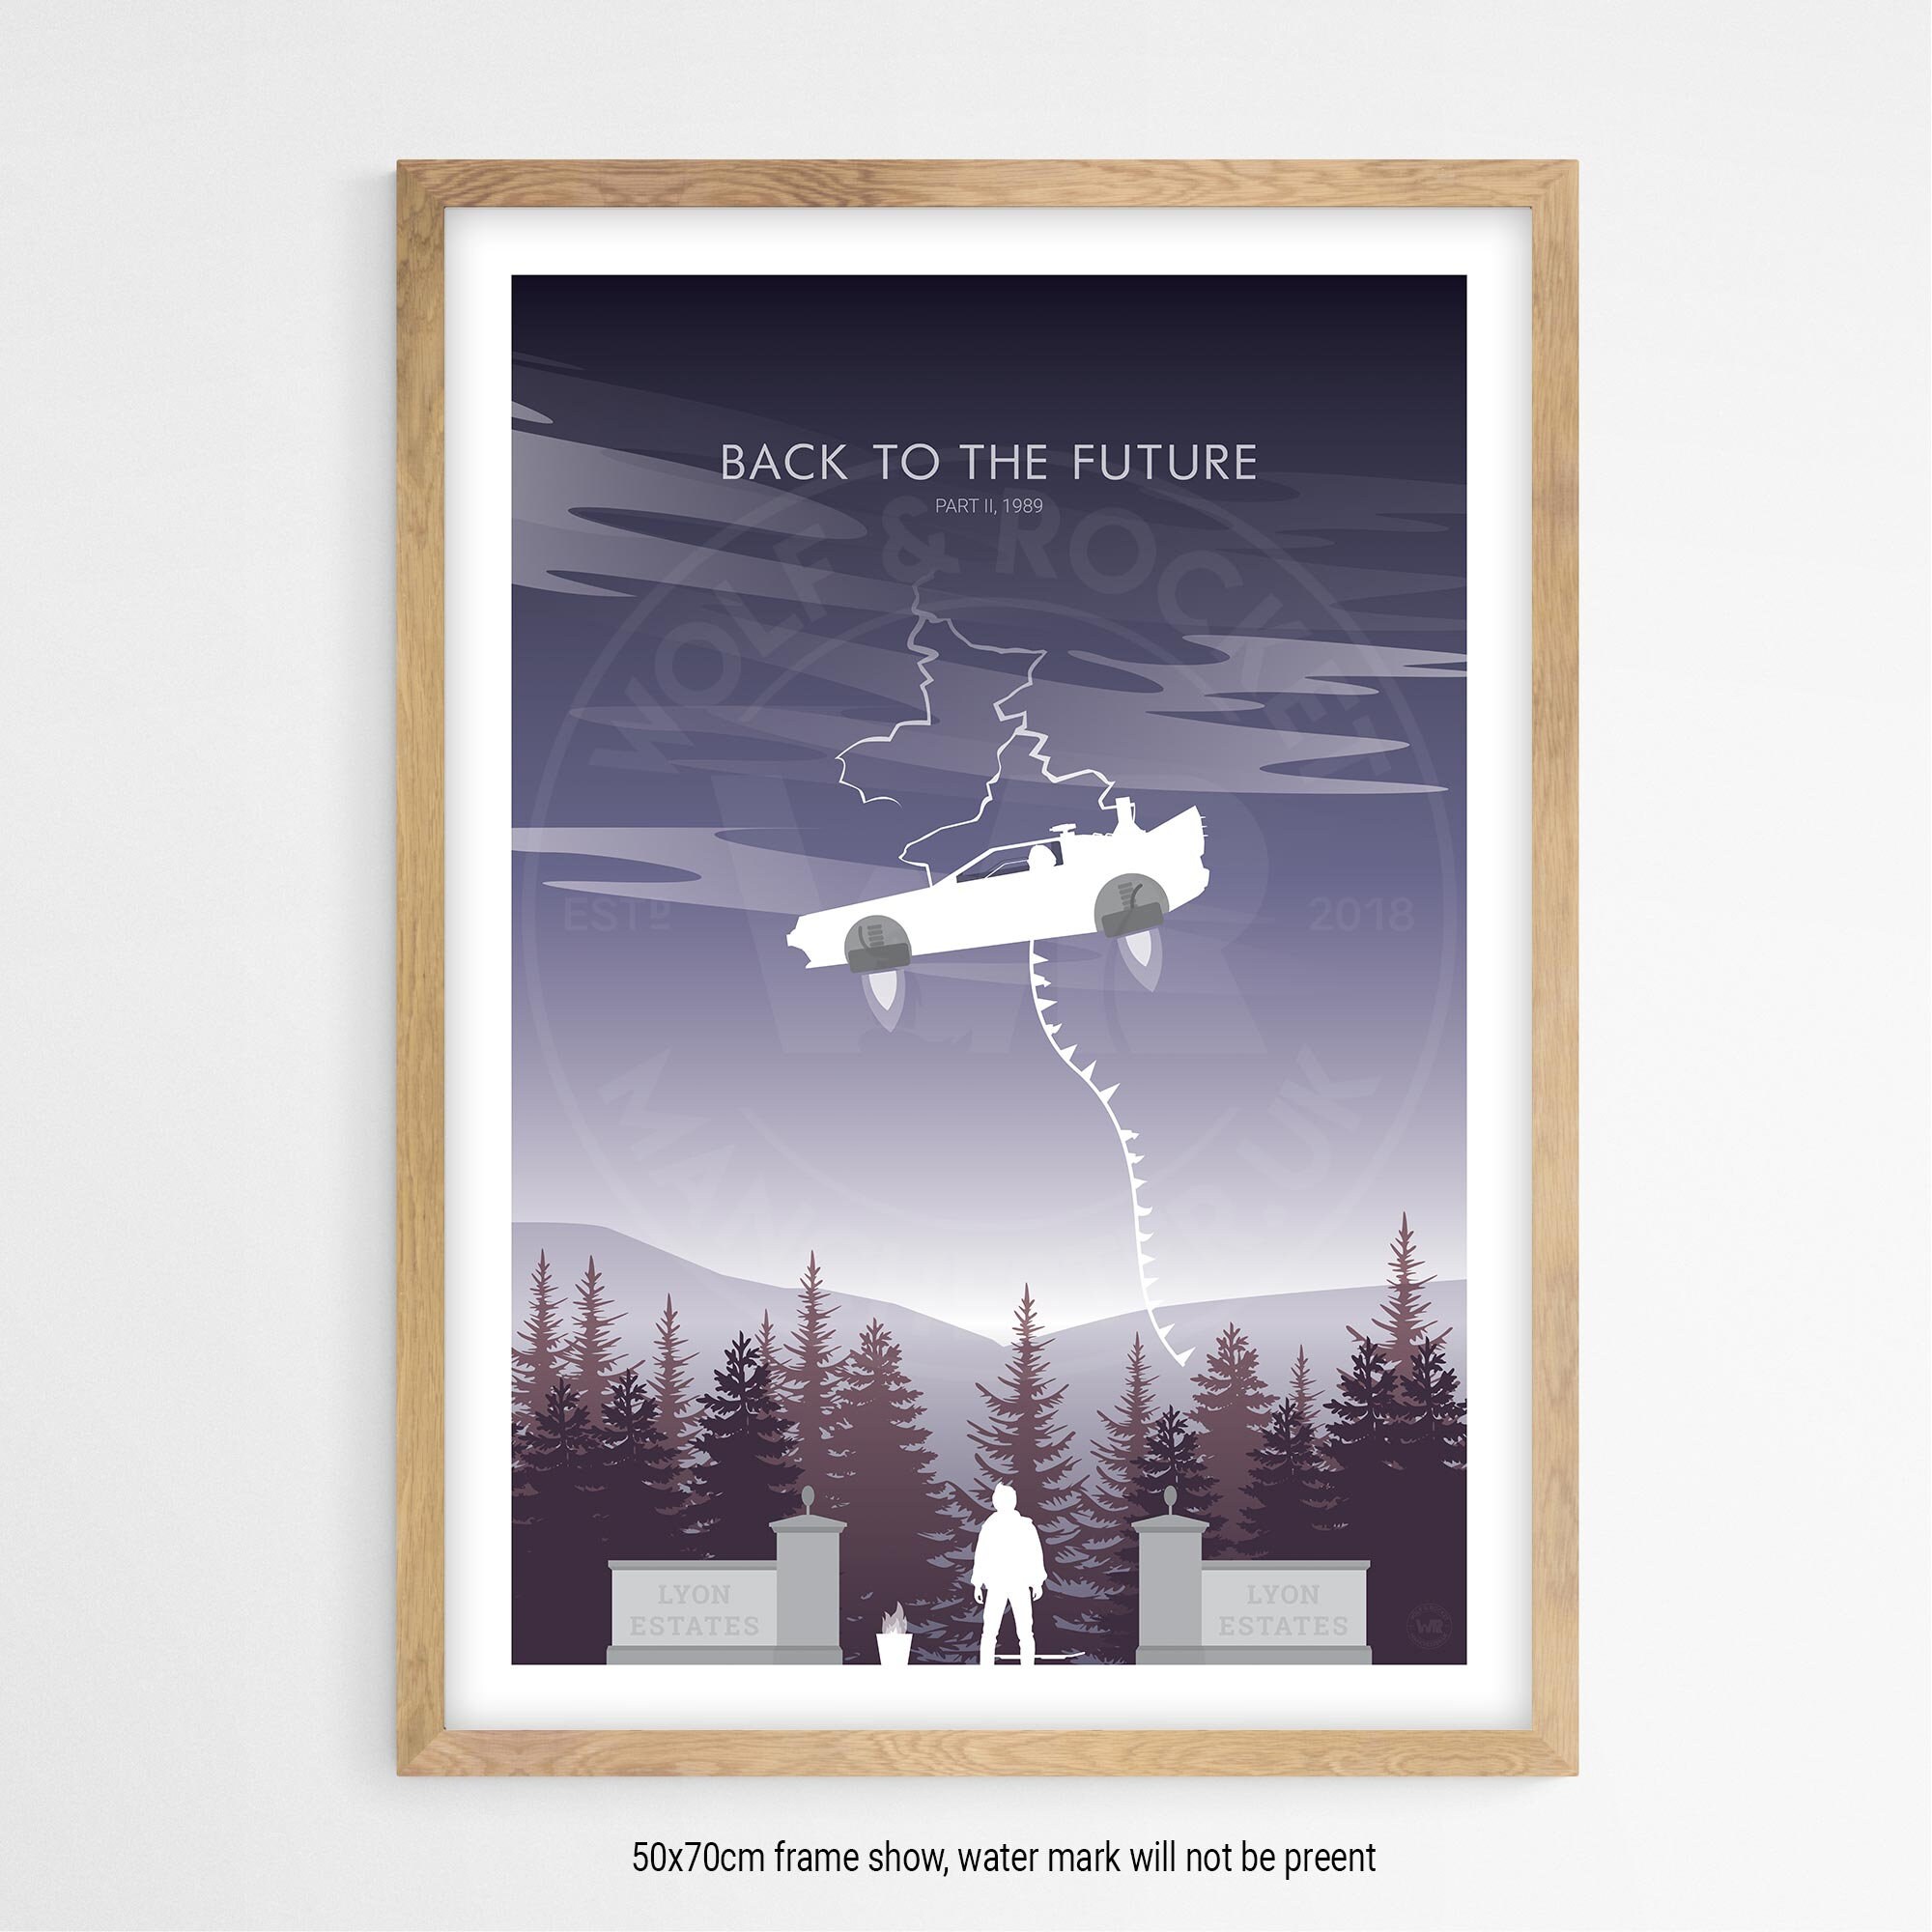 Back to the Future Poster Print Part II Minimalist Movie photo